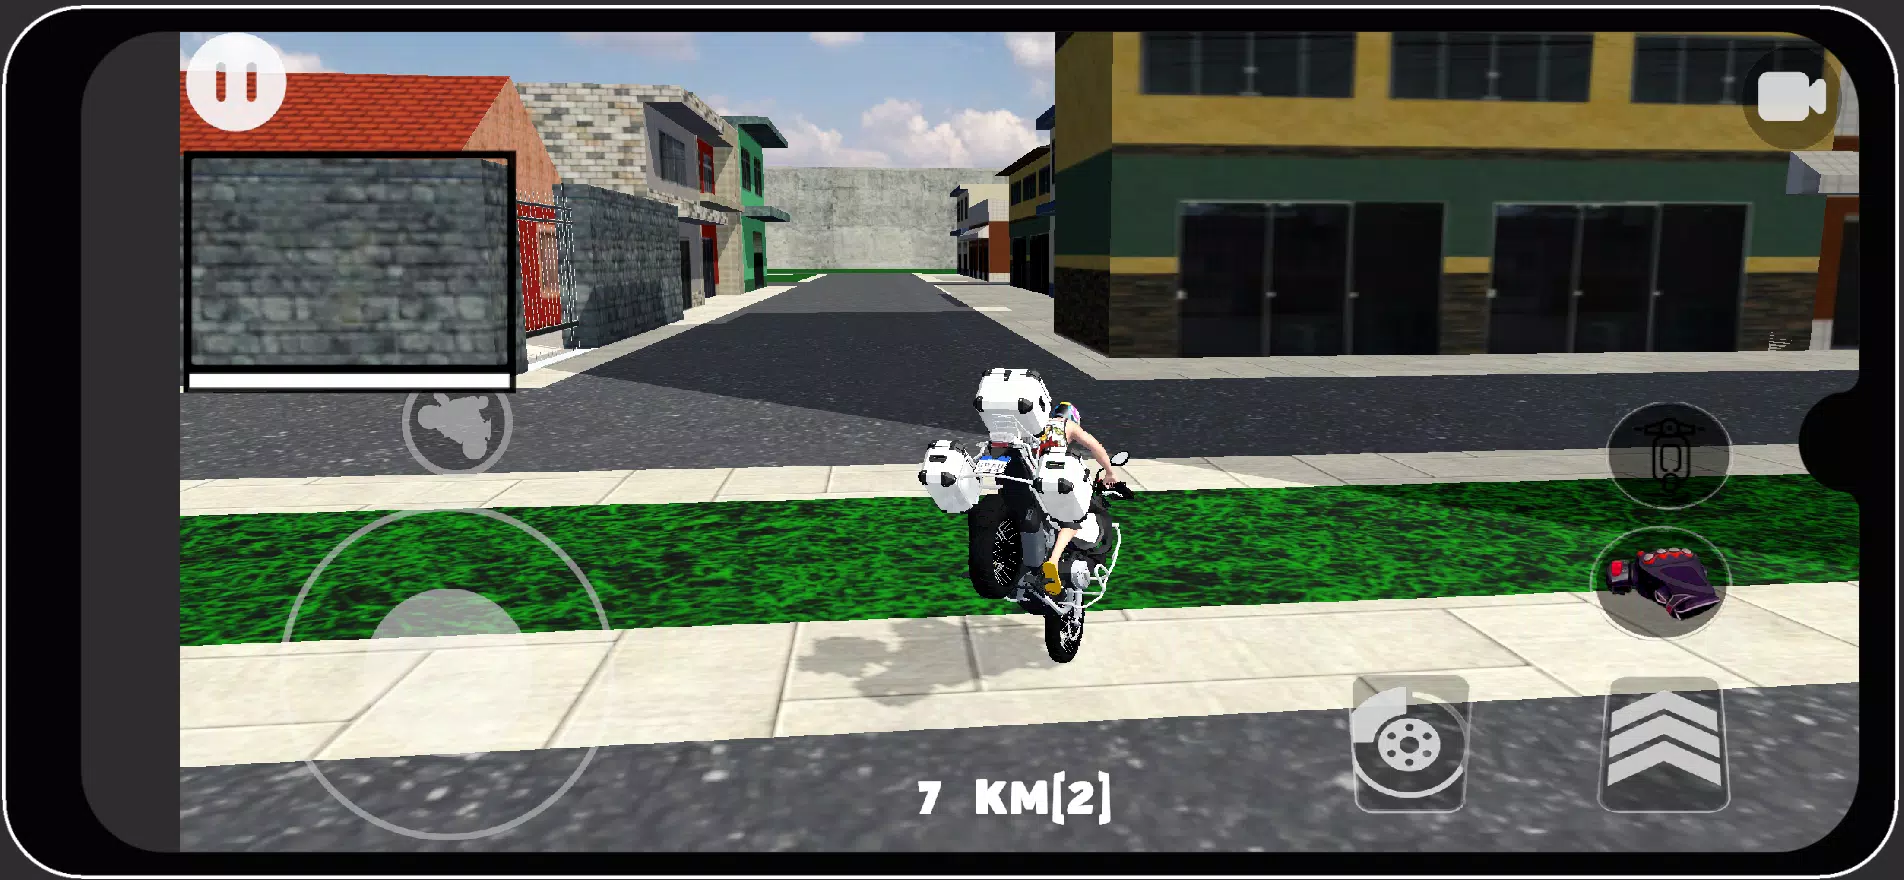 Bikes MX Grau 2 Simulator APK (Android App) - Baixar Grátis